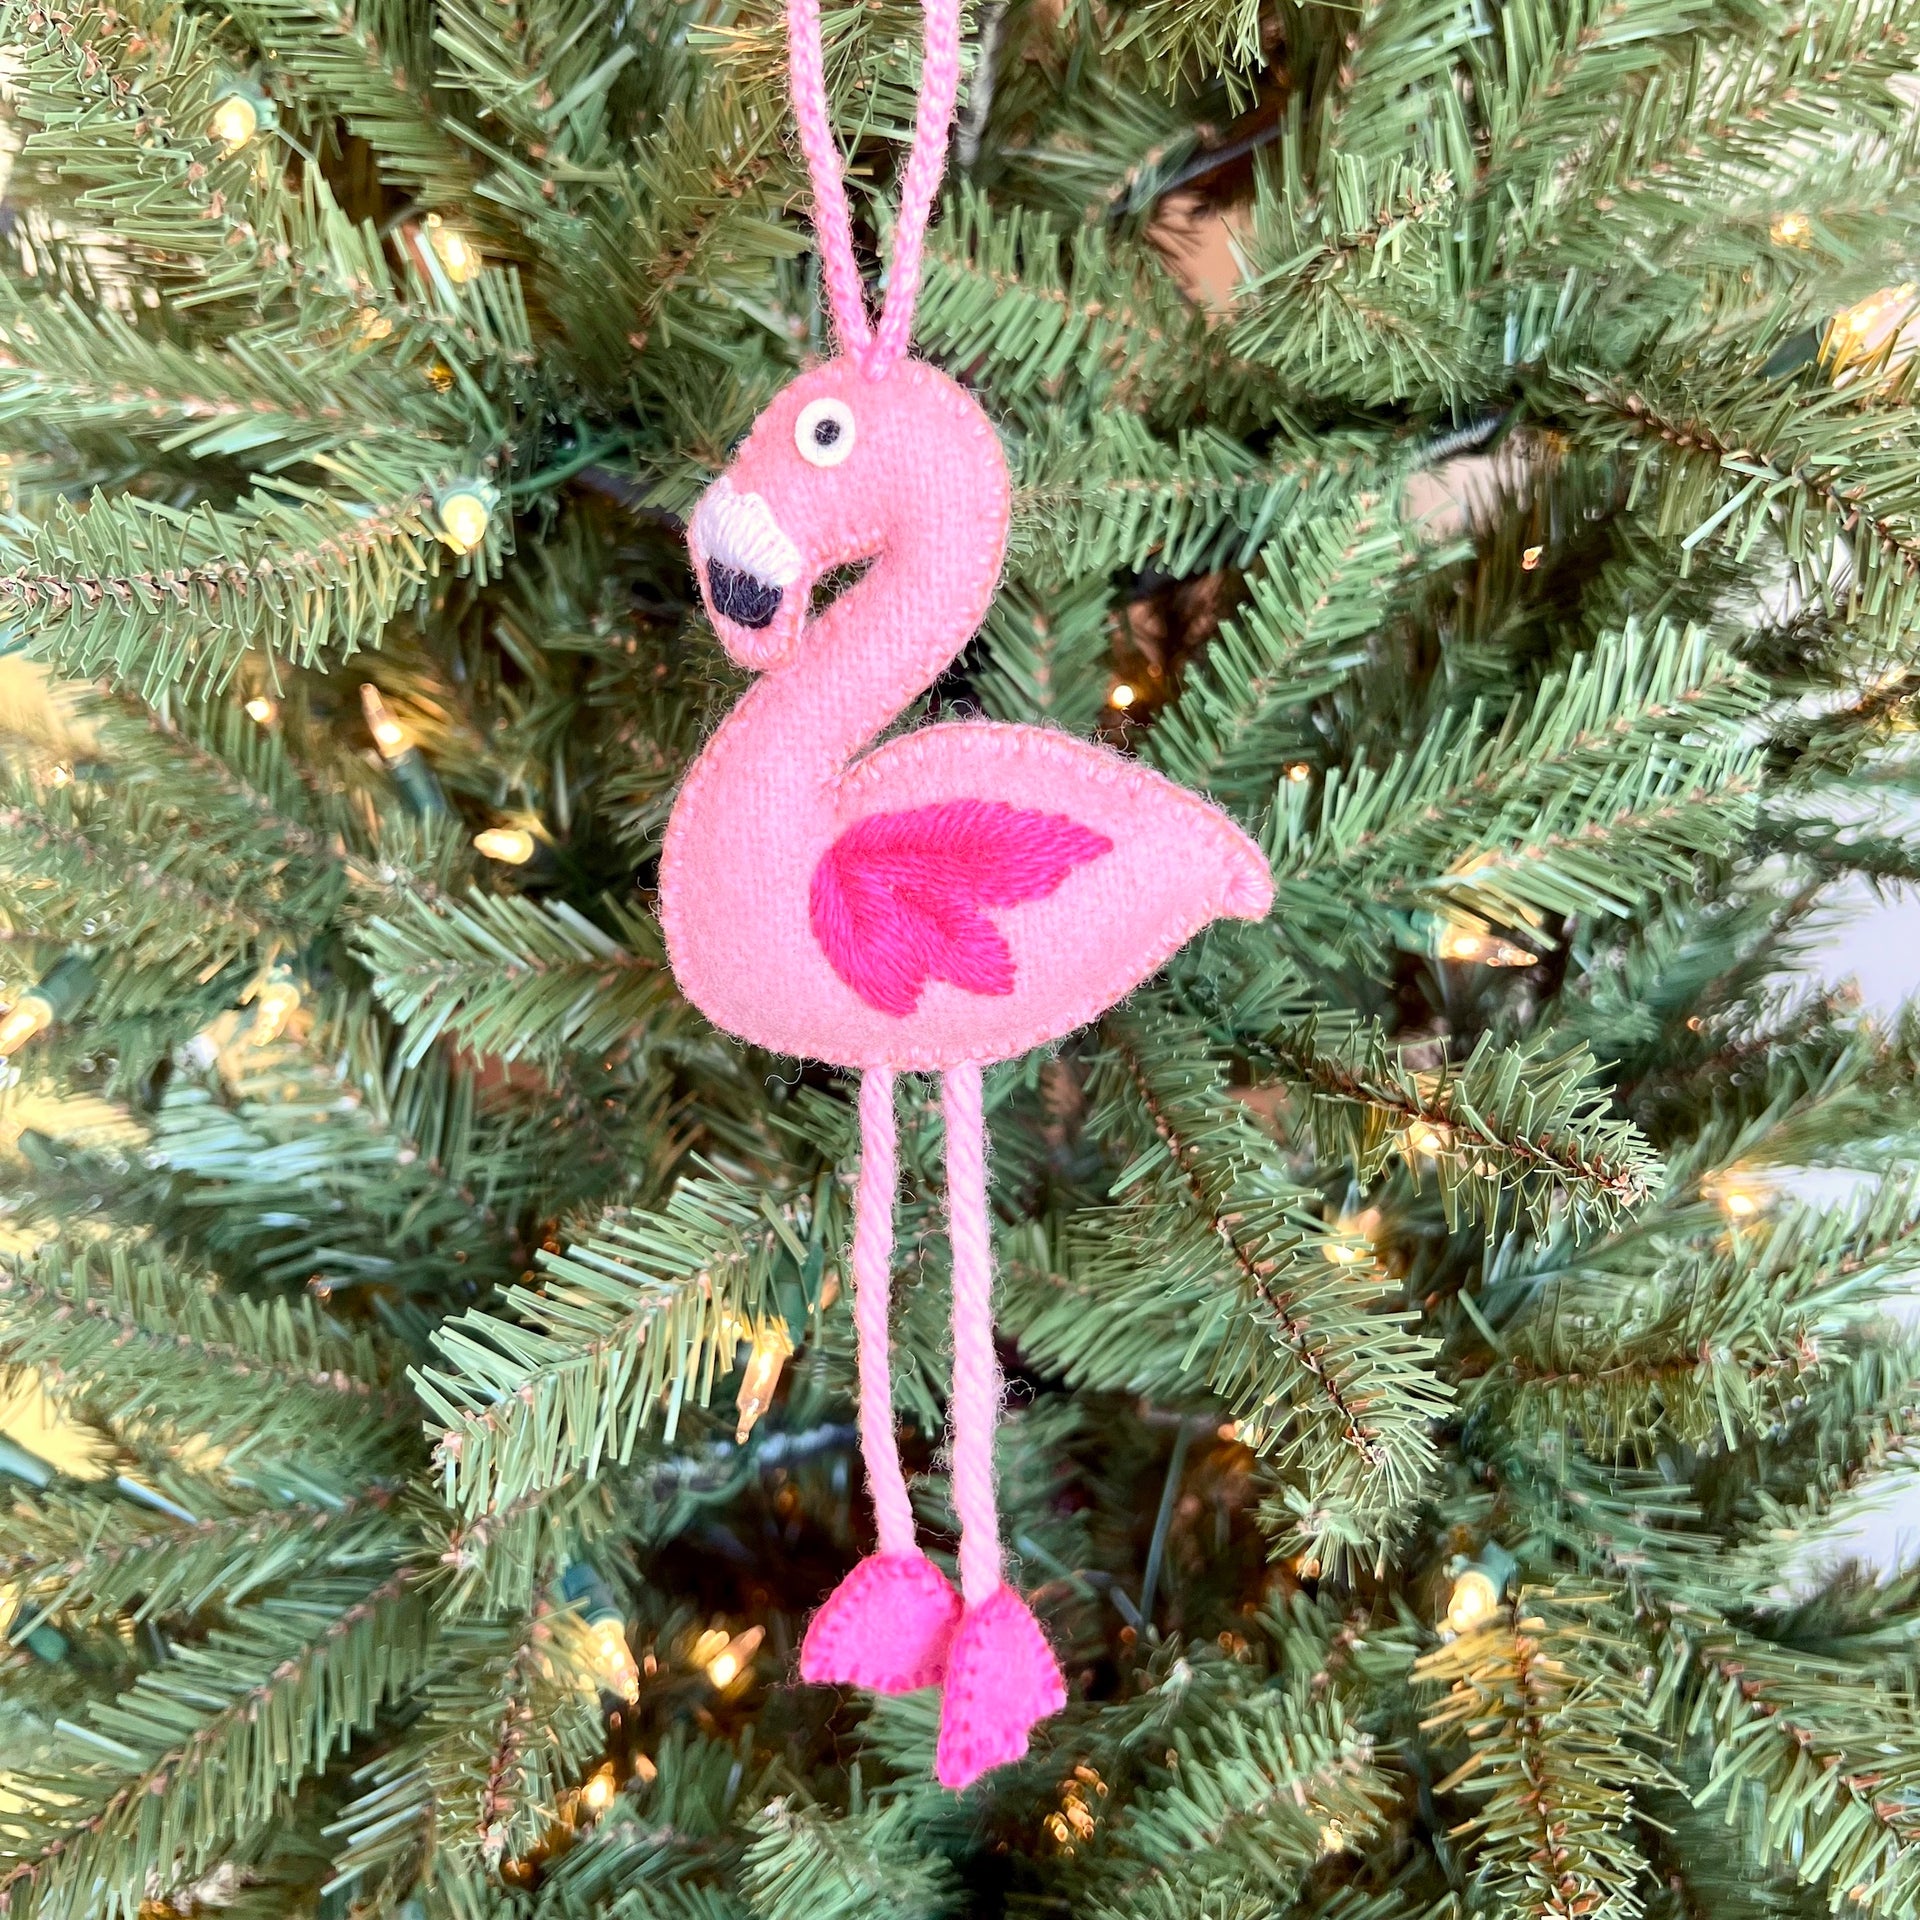 Flamingo Ornament on Christmas Tree